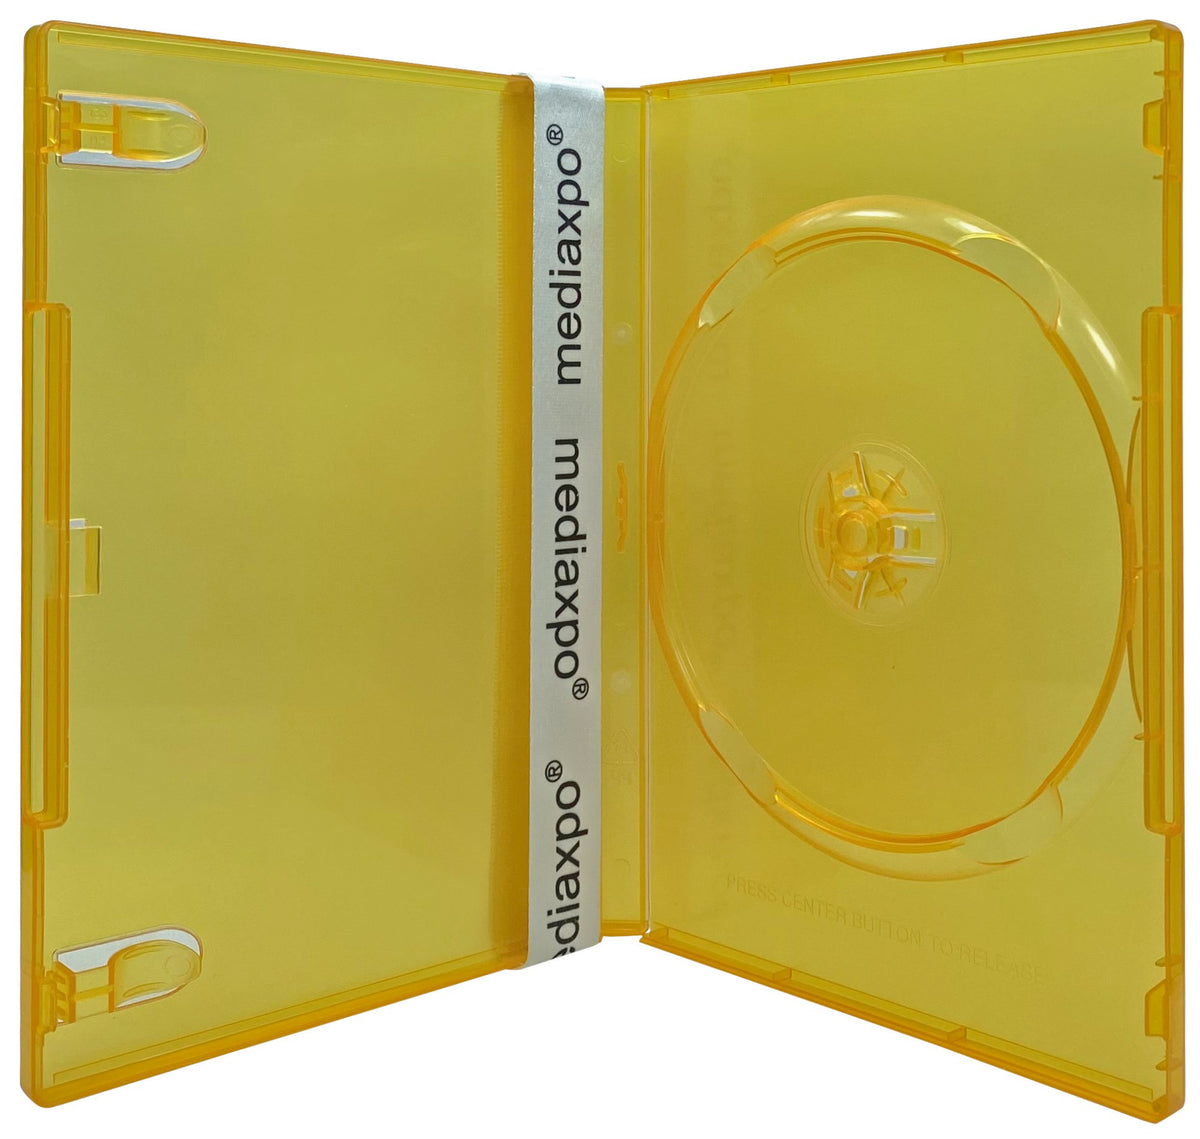  CheckOutStore (10) Premium Standard Single 1-Disc DVD Cases  14mm (Yellow) : Home & Kitchen